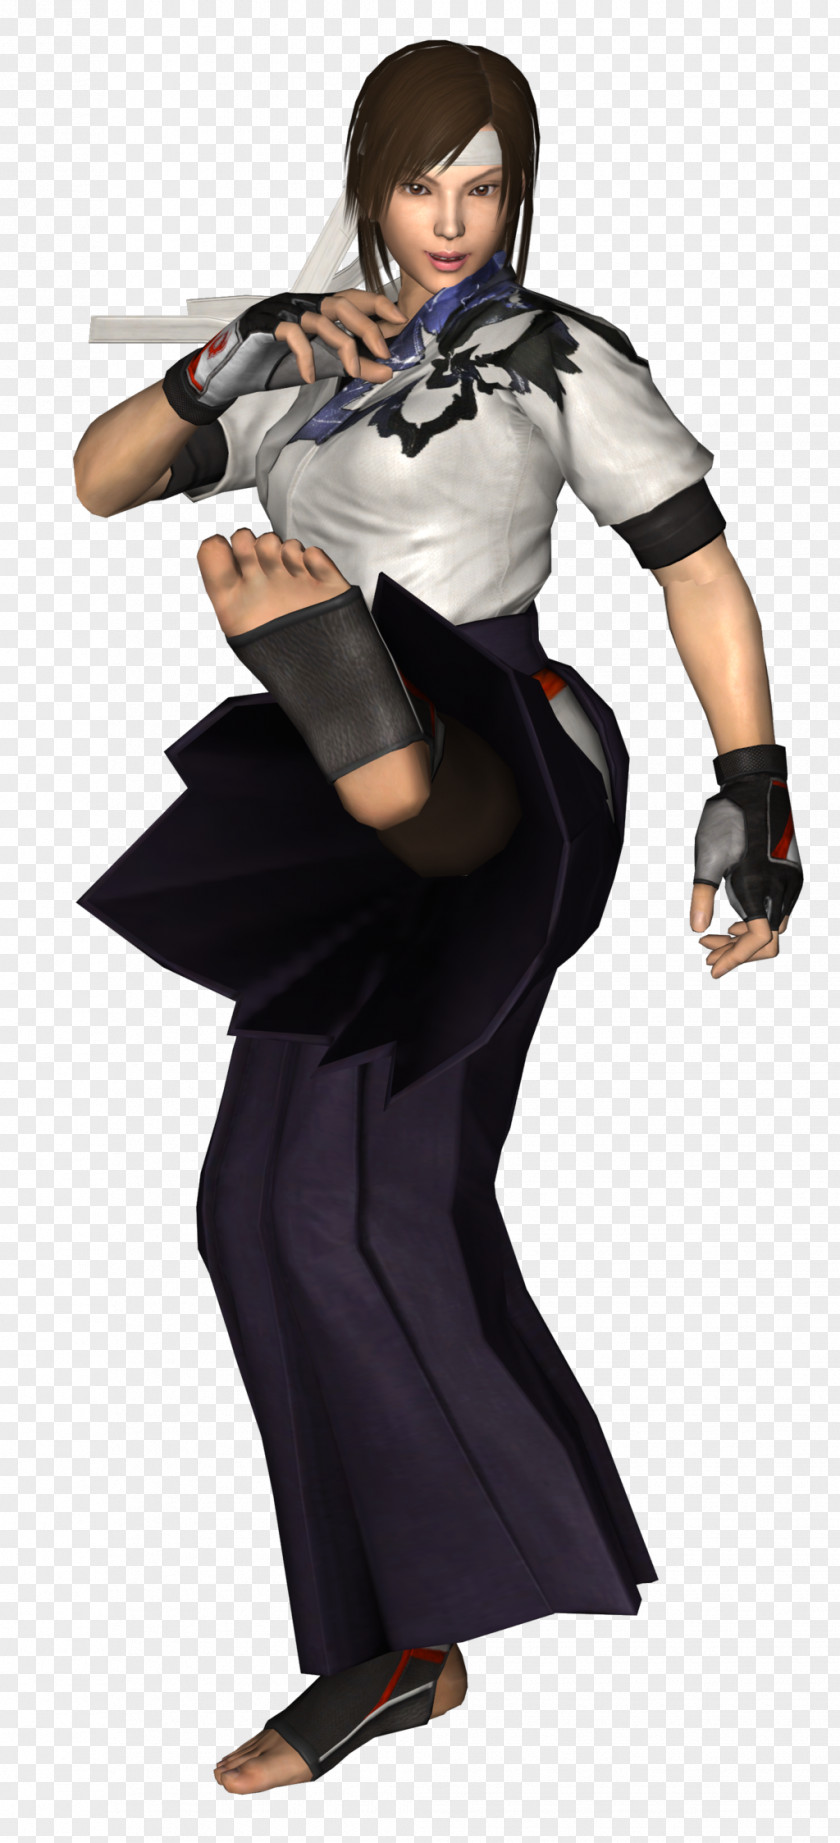 Asuka Tekken 3D: Prime Edition Zafina Angel Clothing PNG